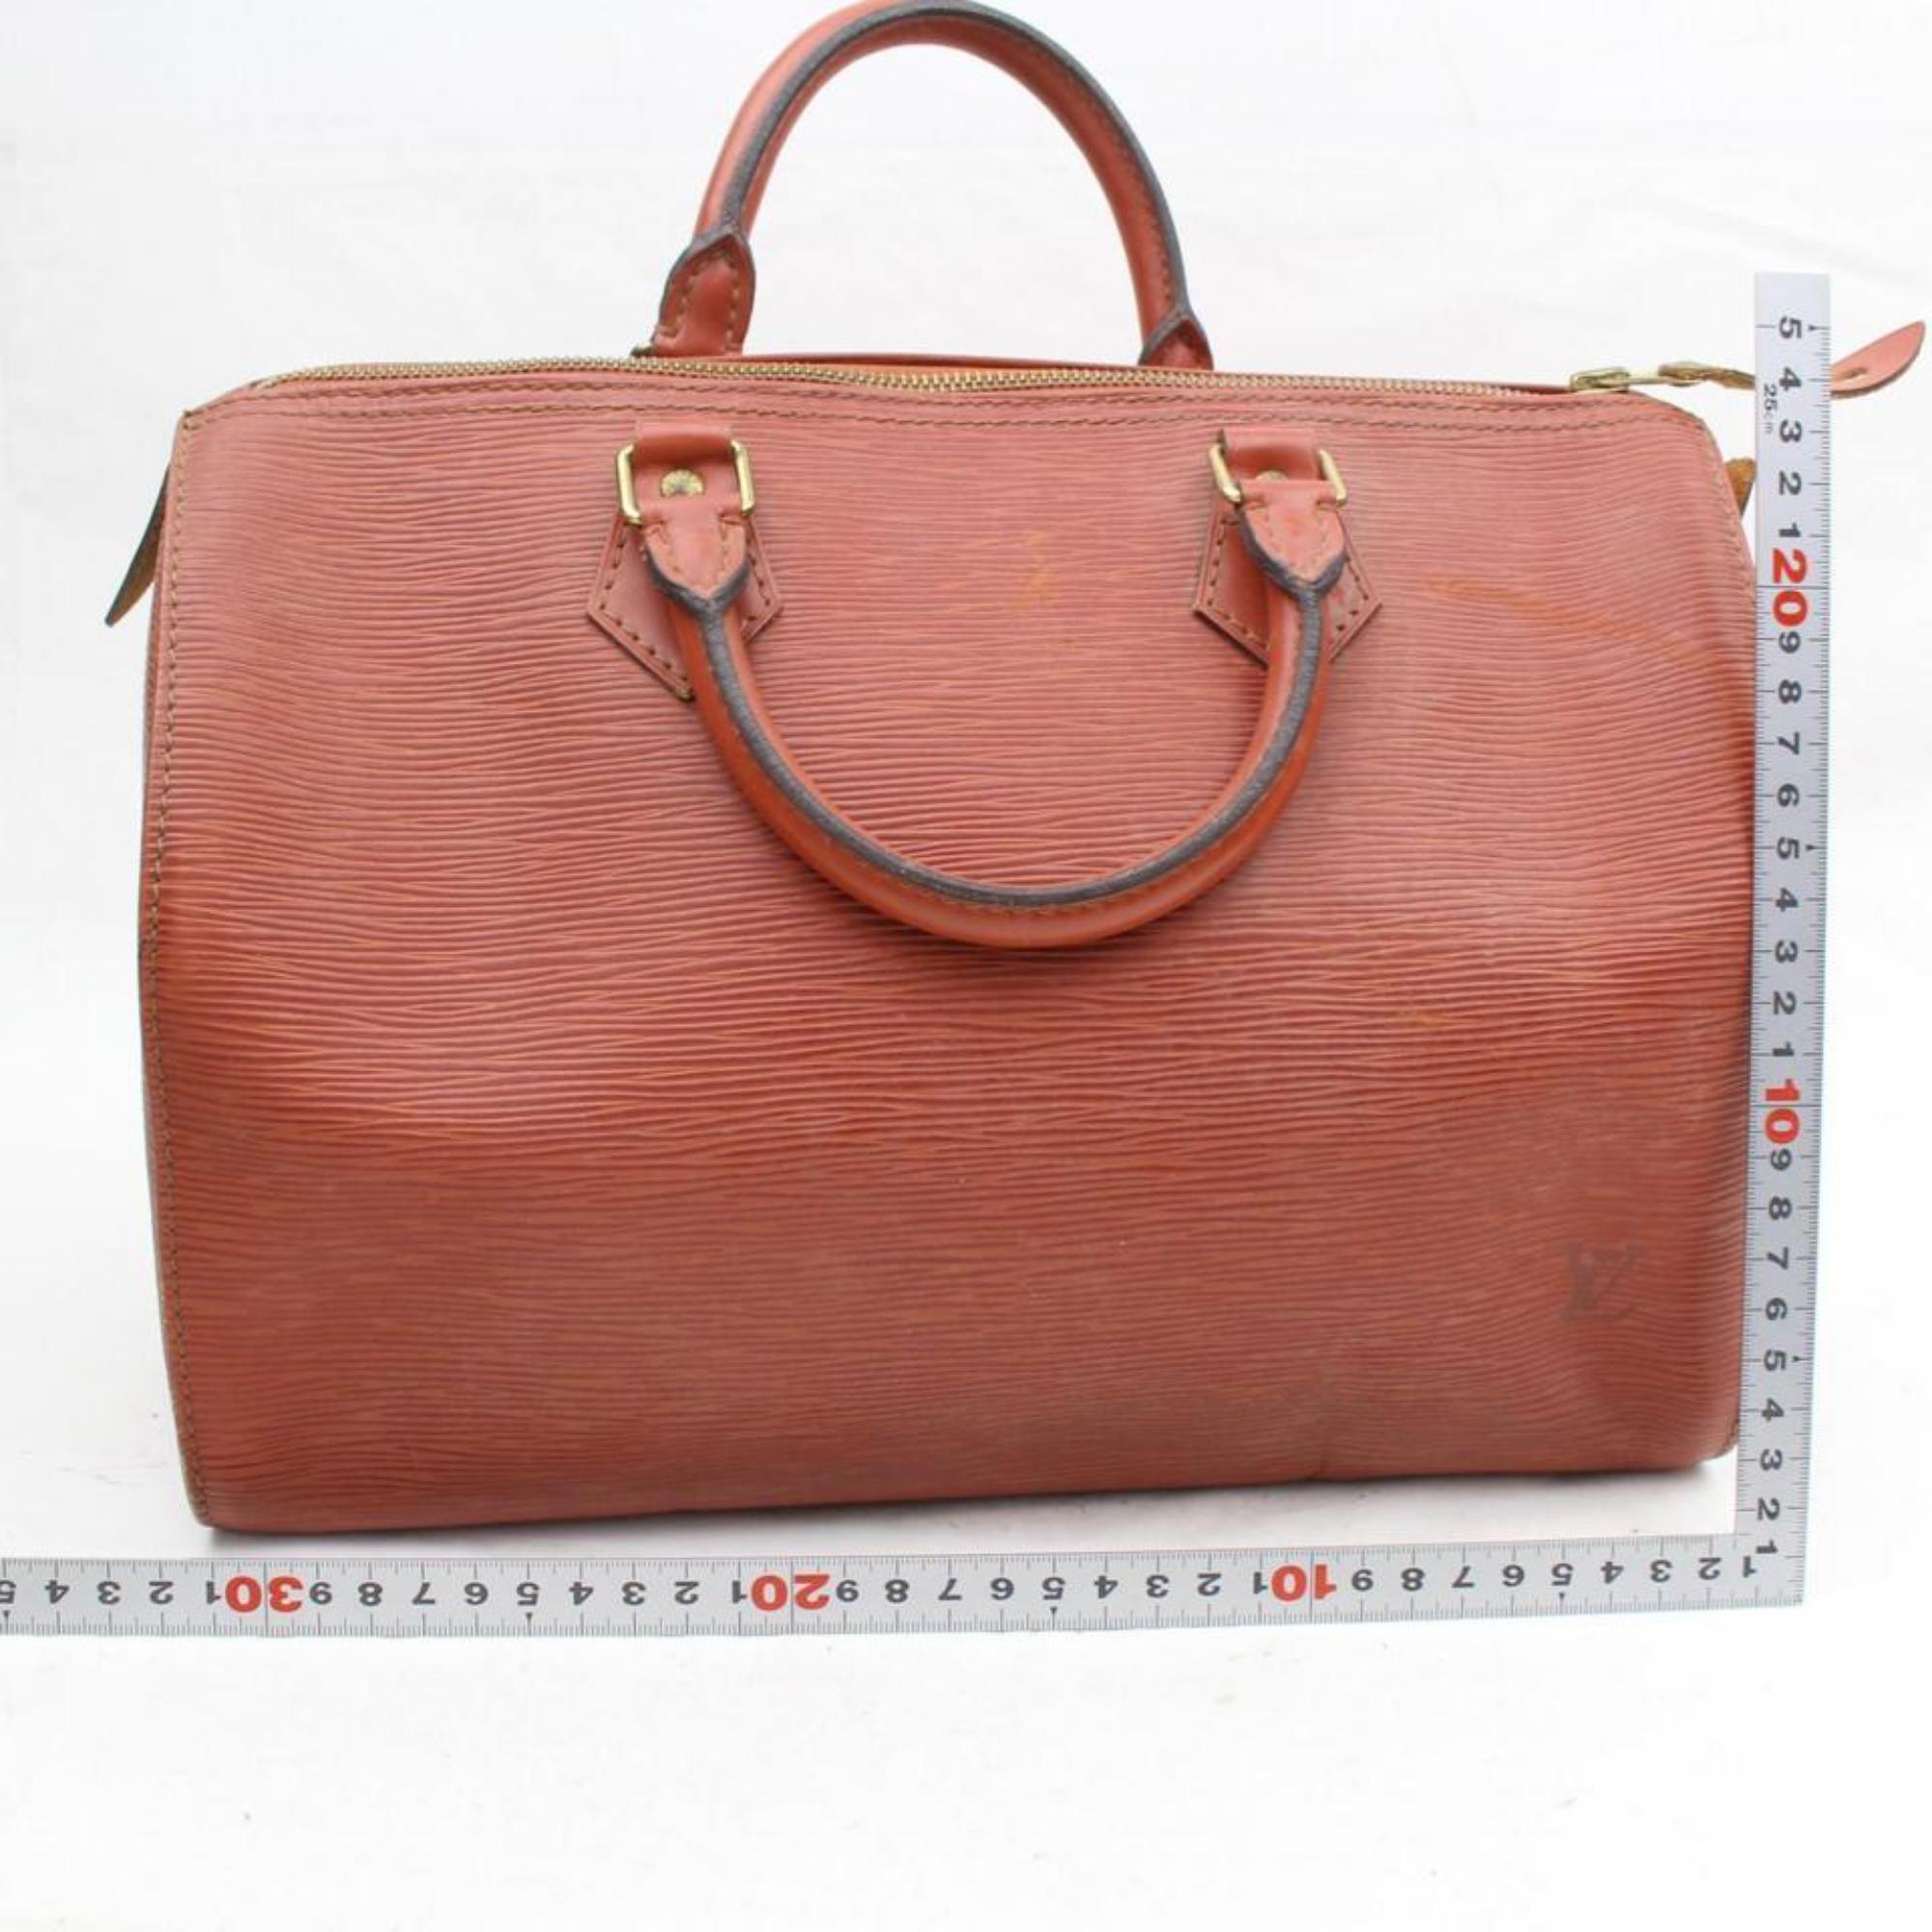 Women's Louis Vuitton Speedy 30 869787 Brown Leather Satchel For Sale